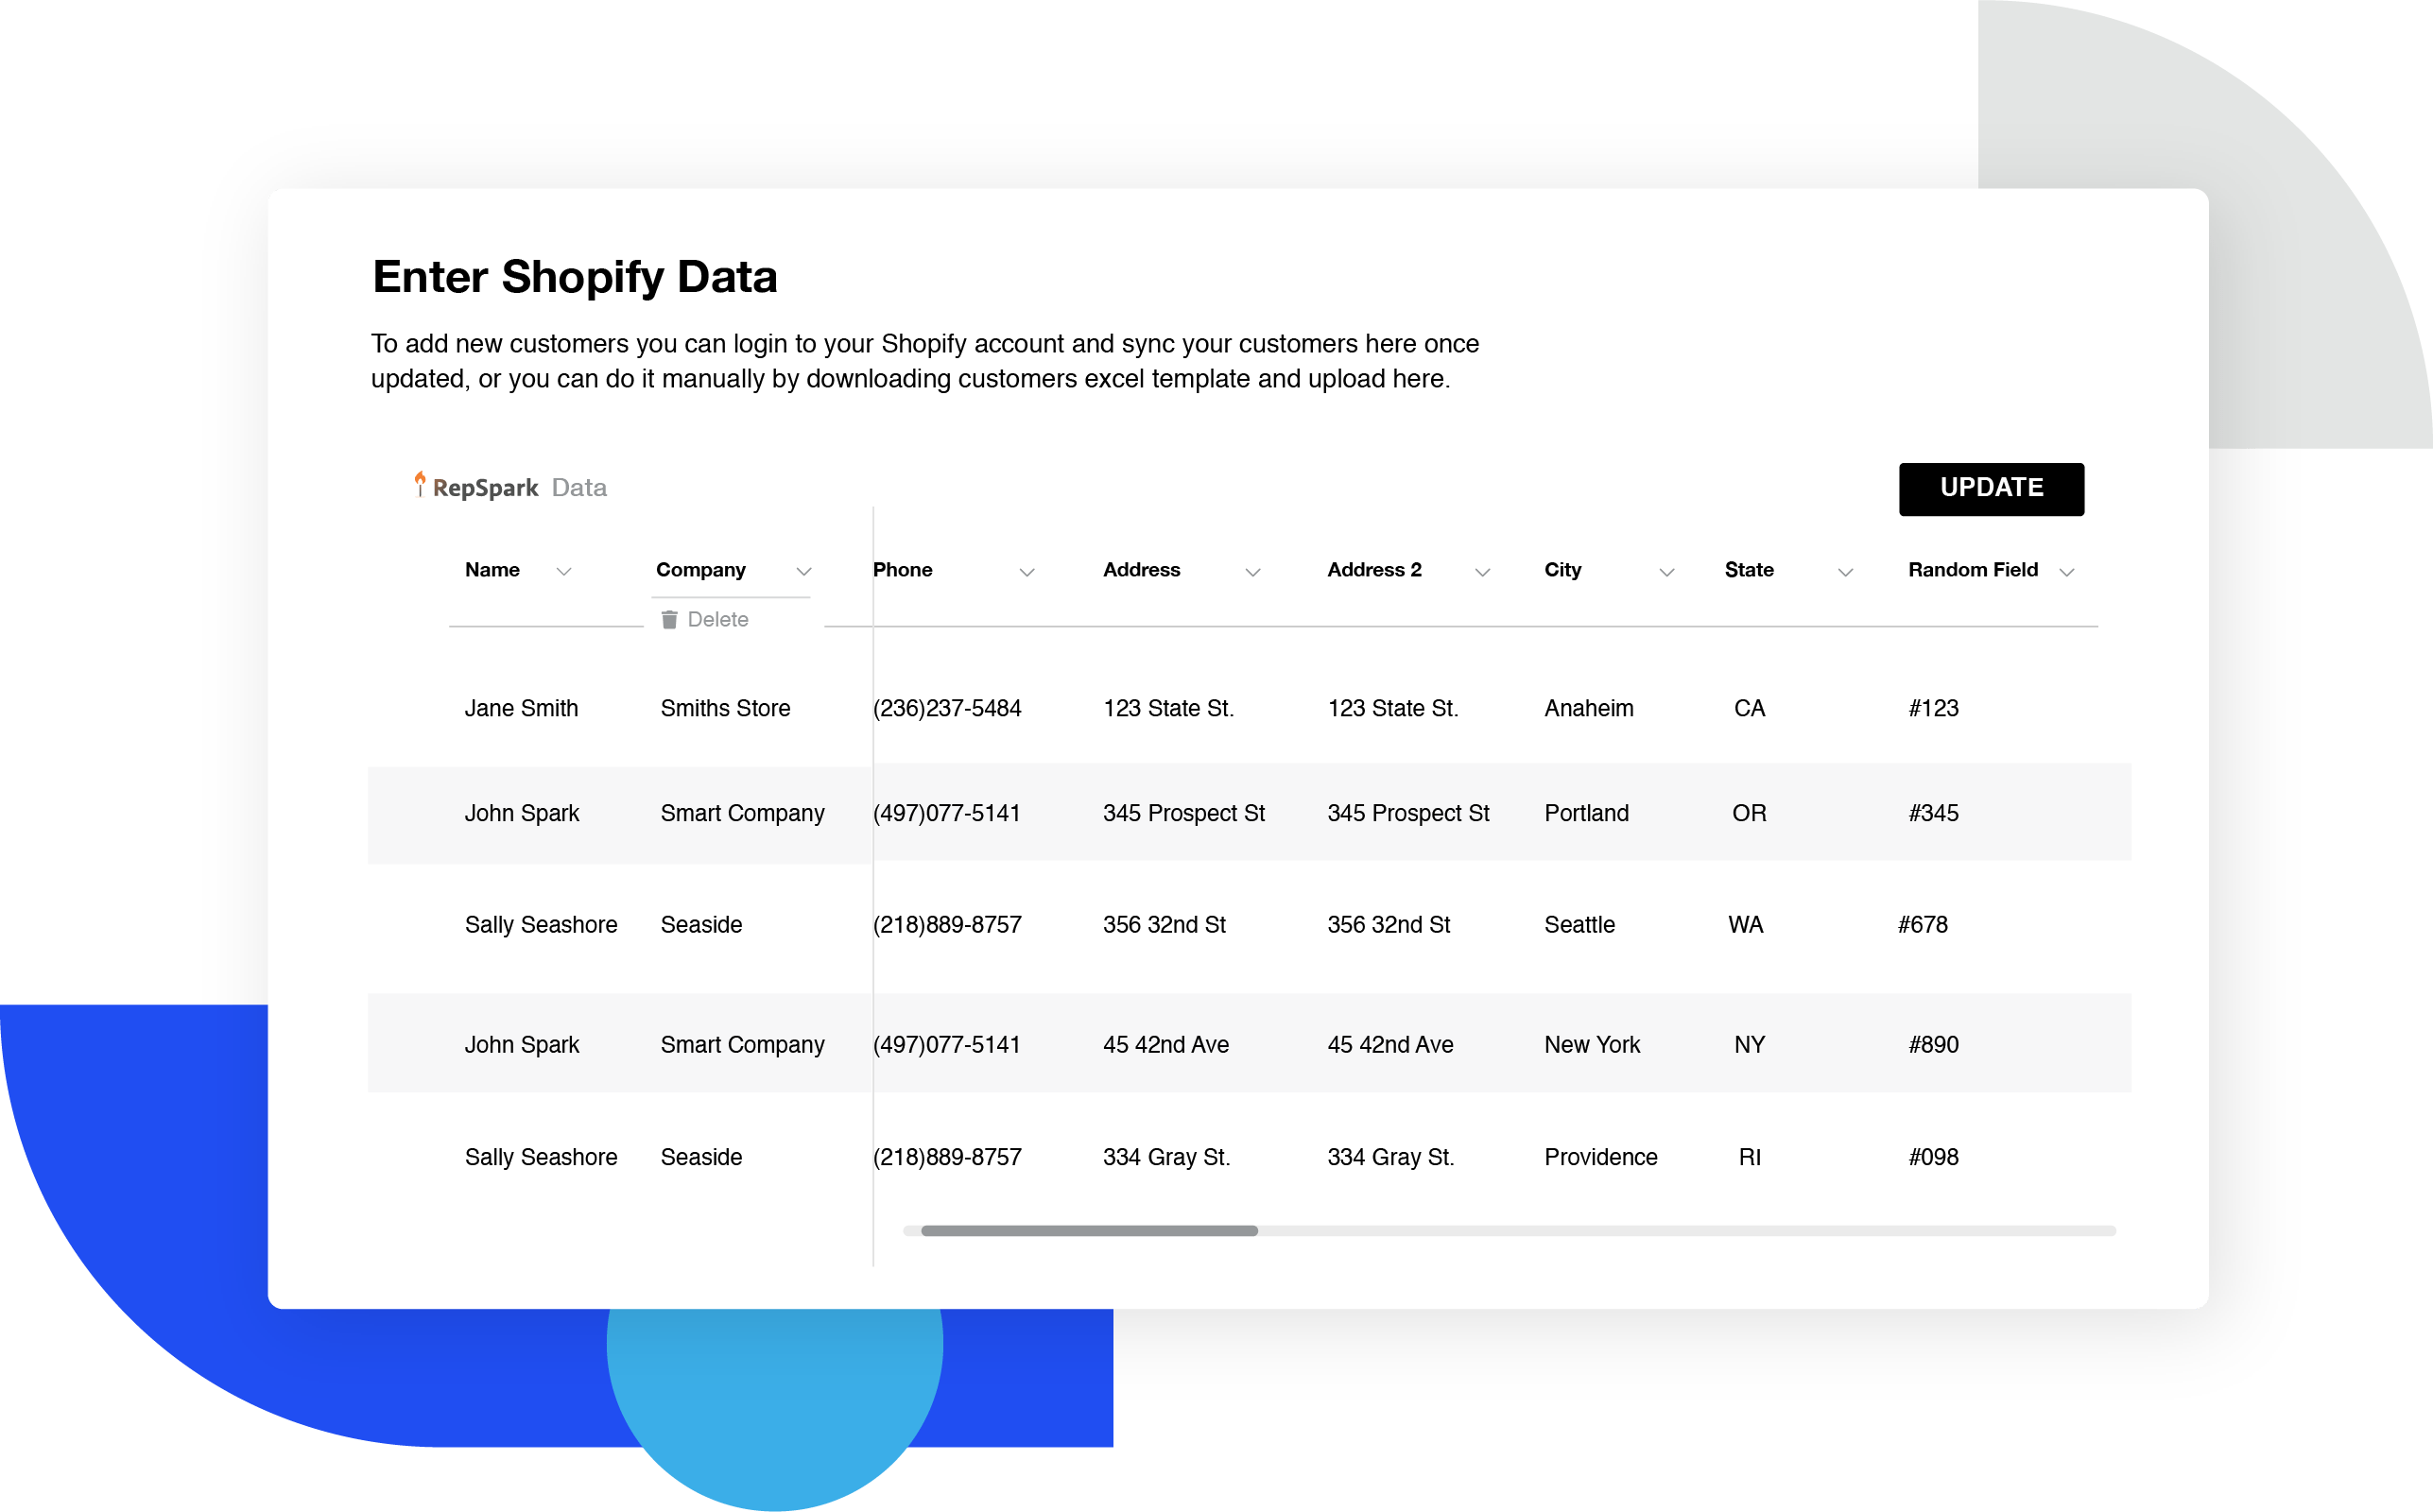 Image of customer data information through shopify.